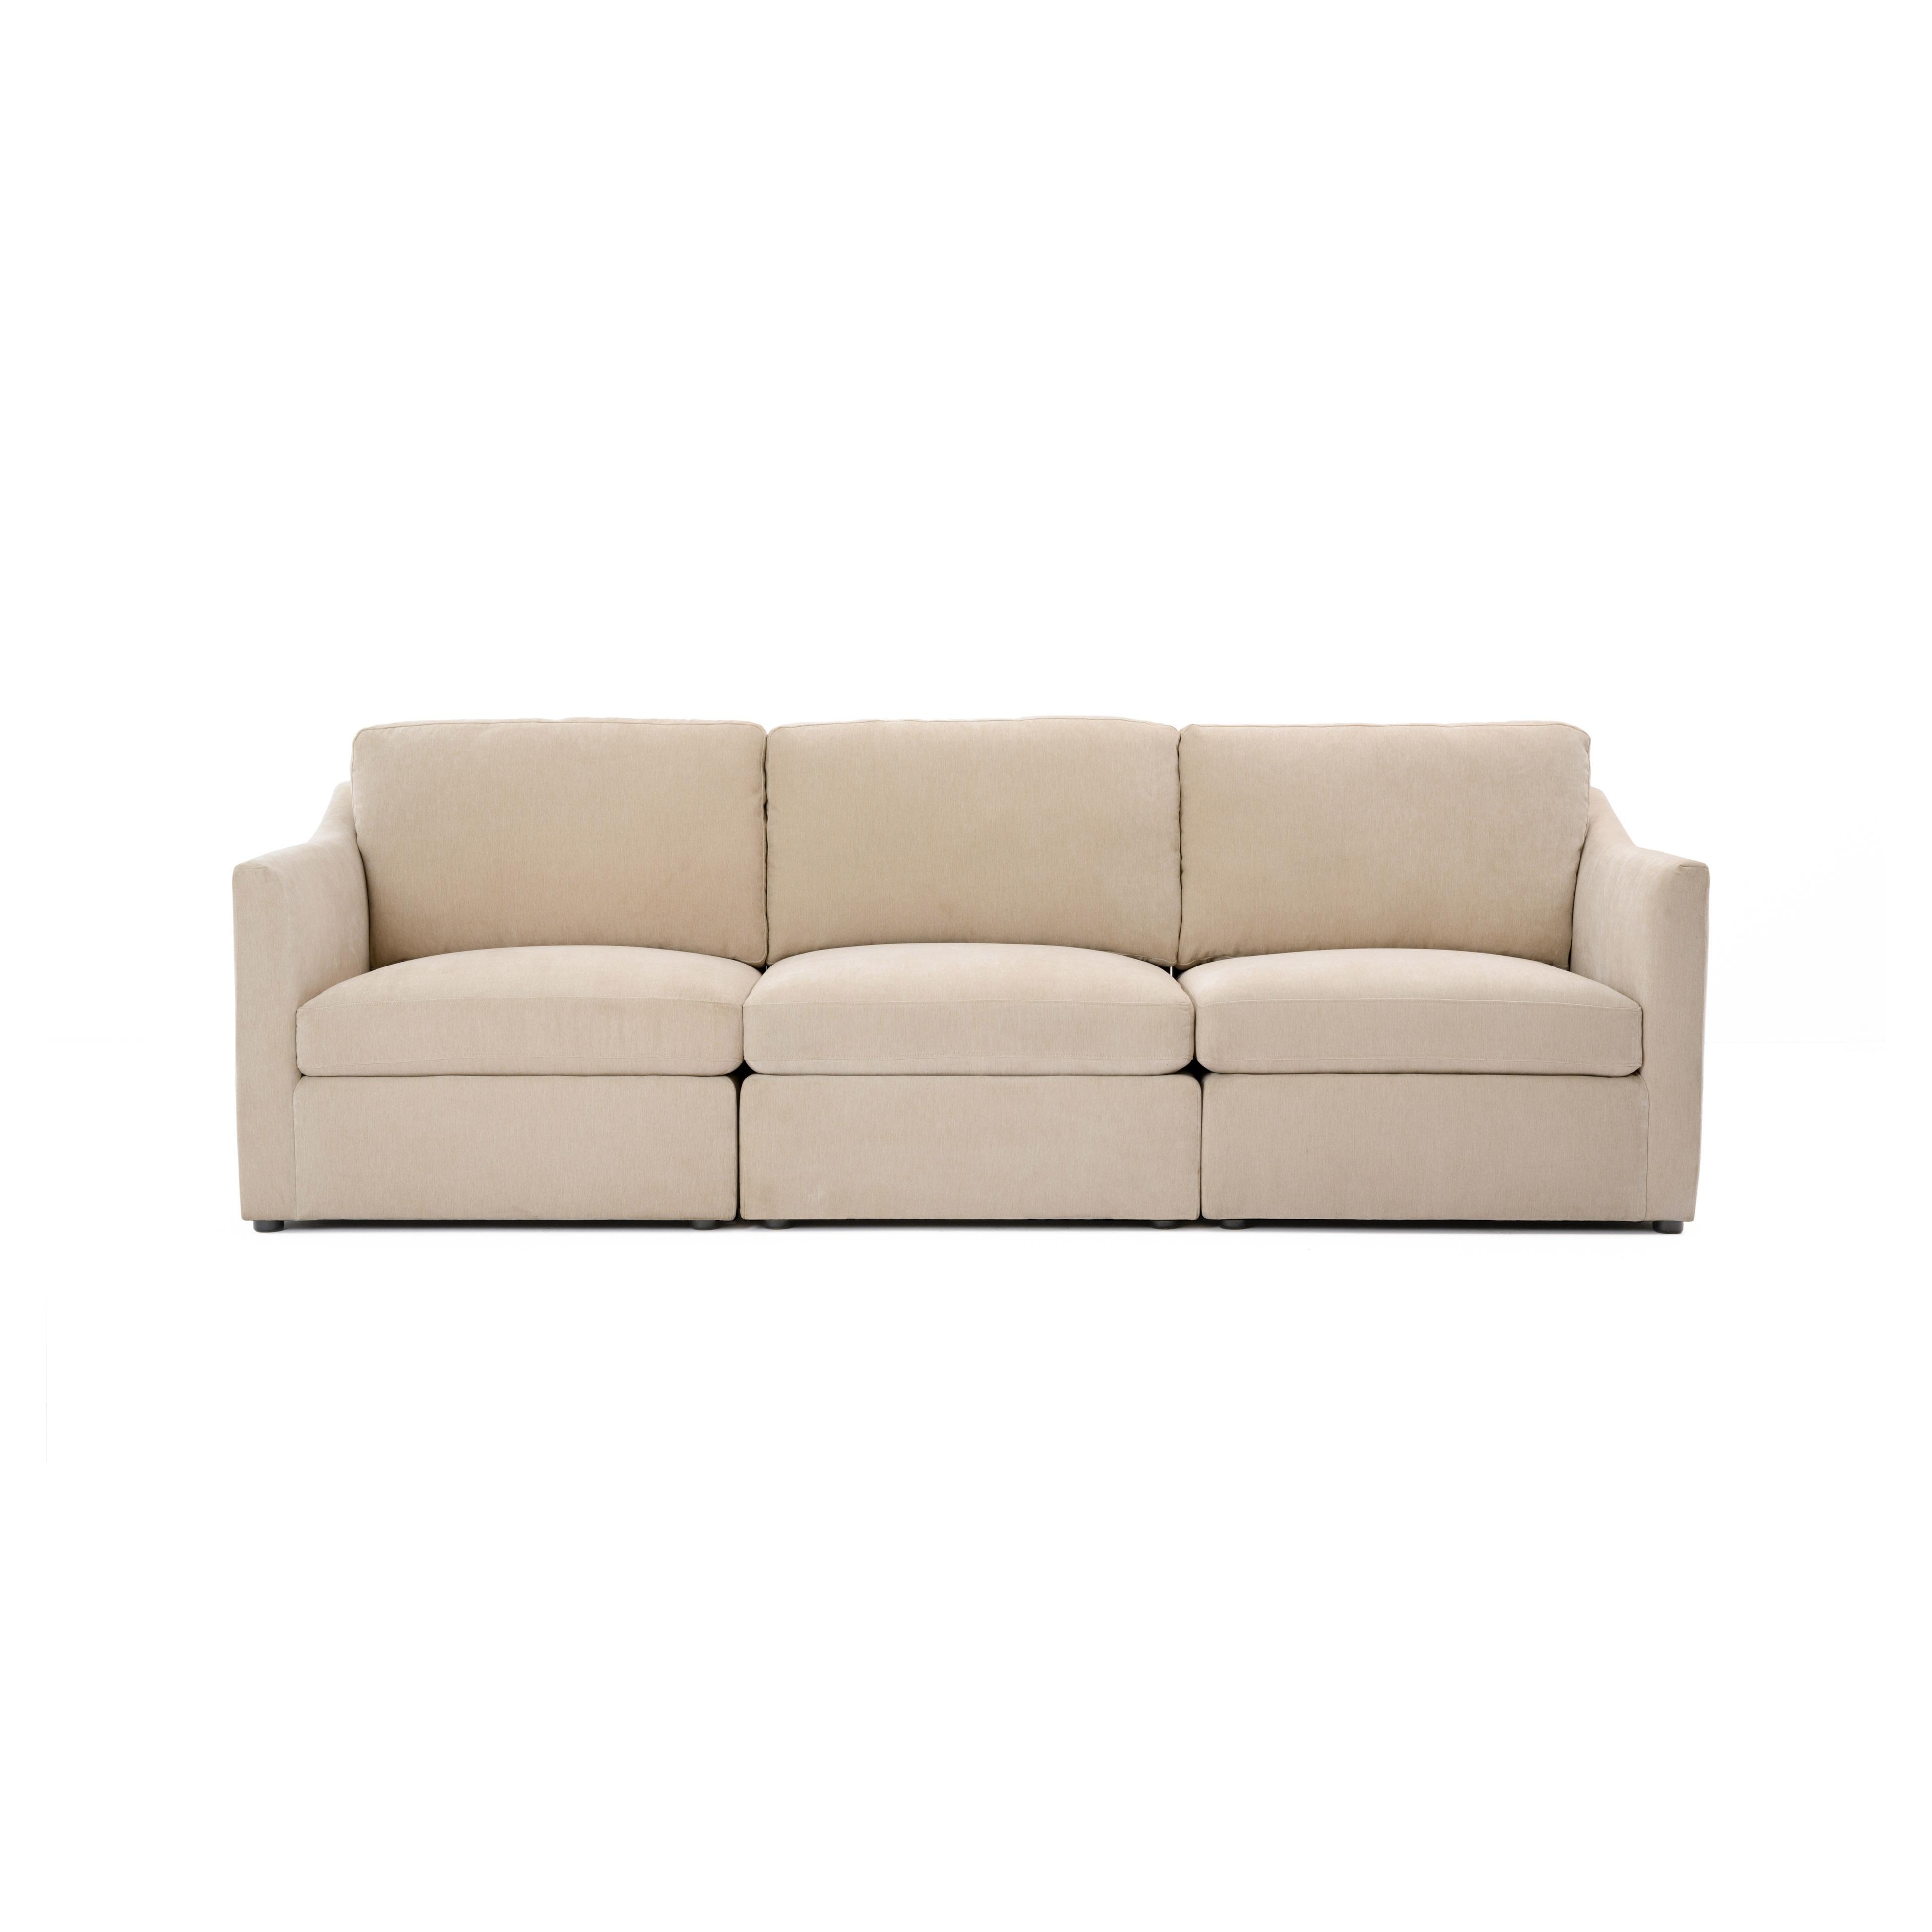 Aiden Beige Modular Sofa - Image 0